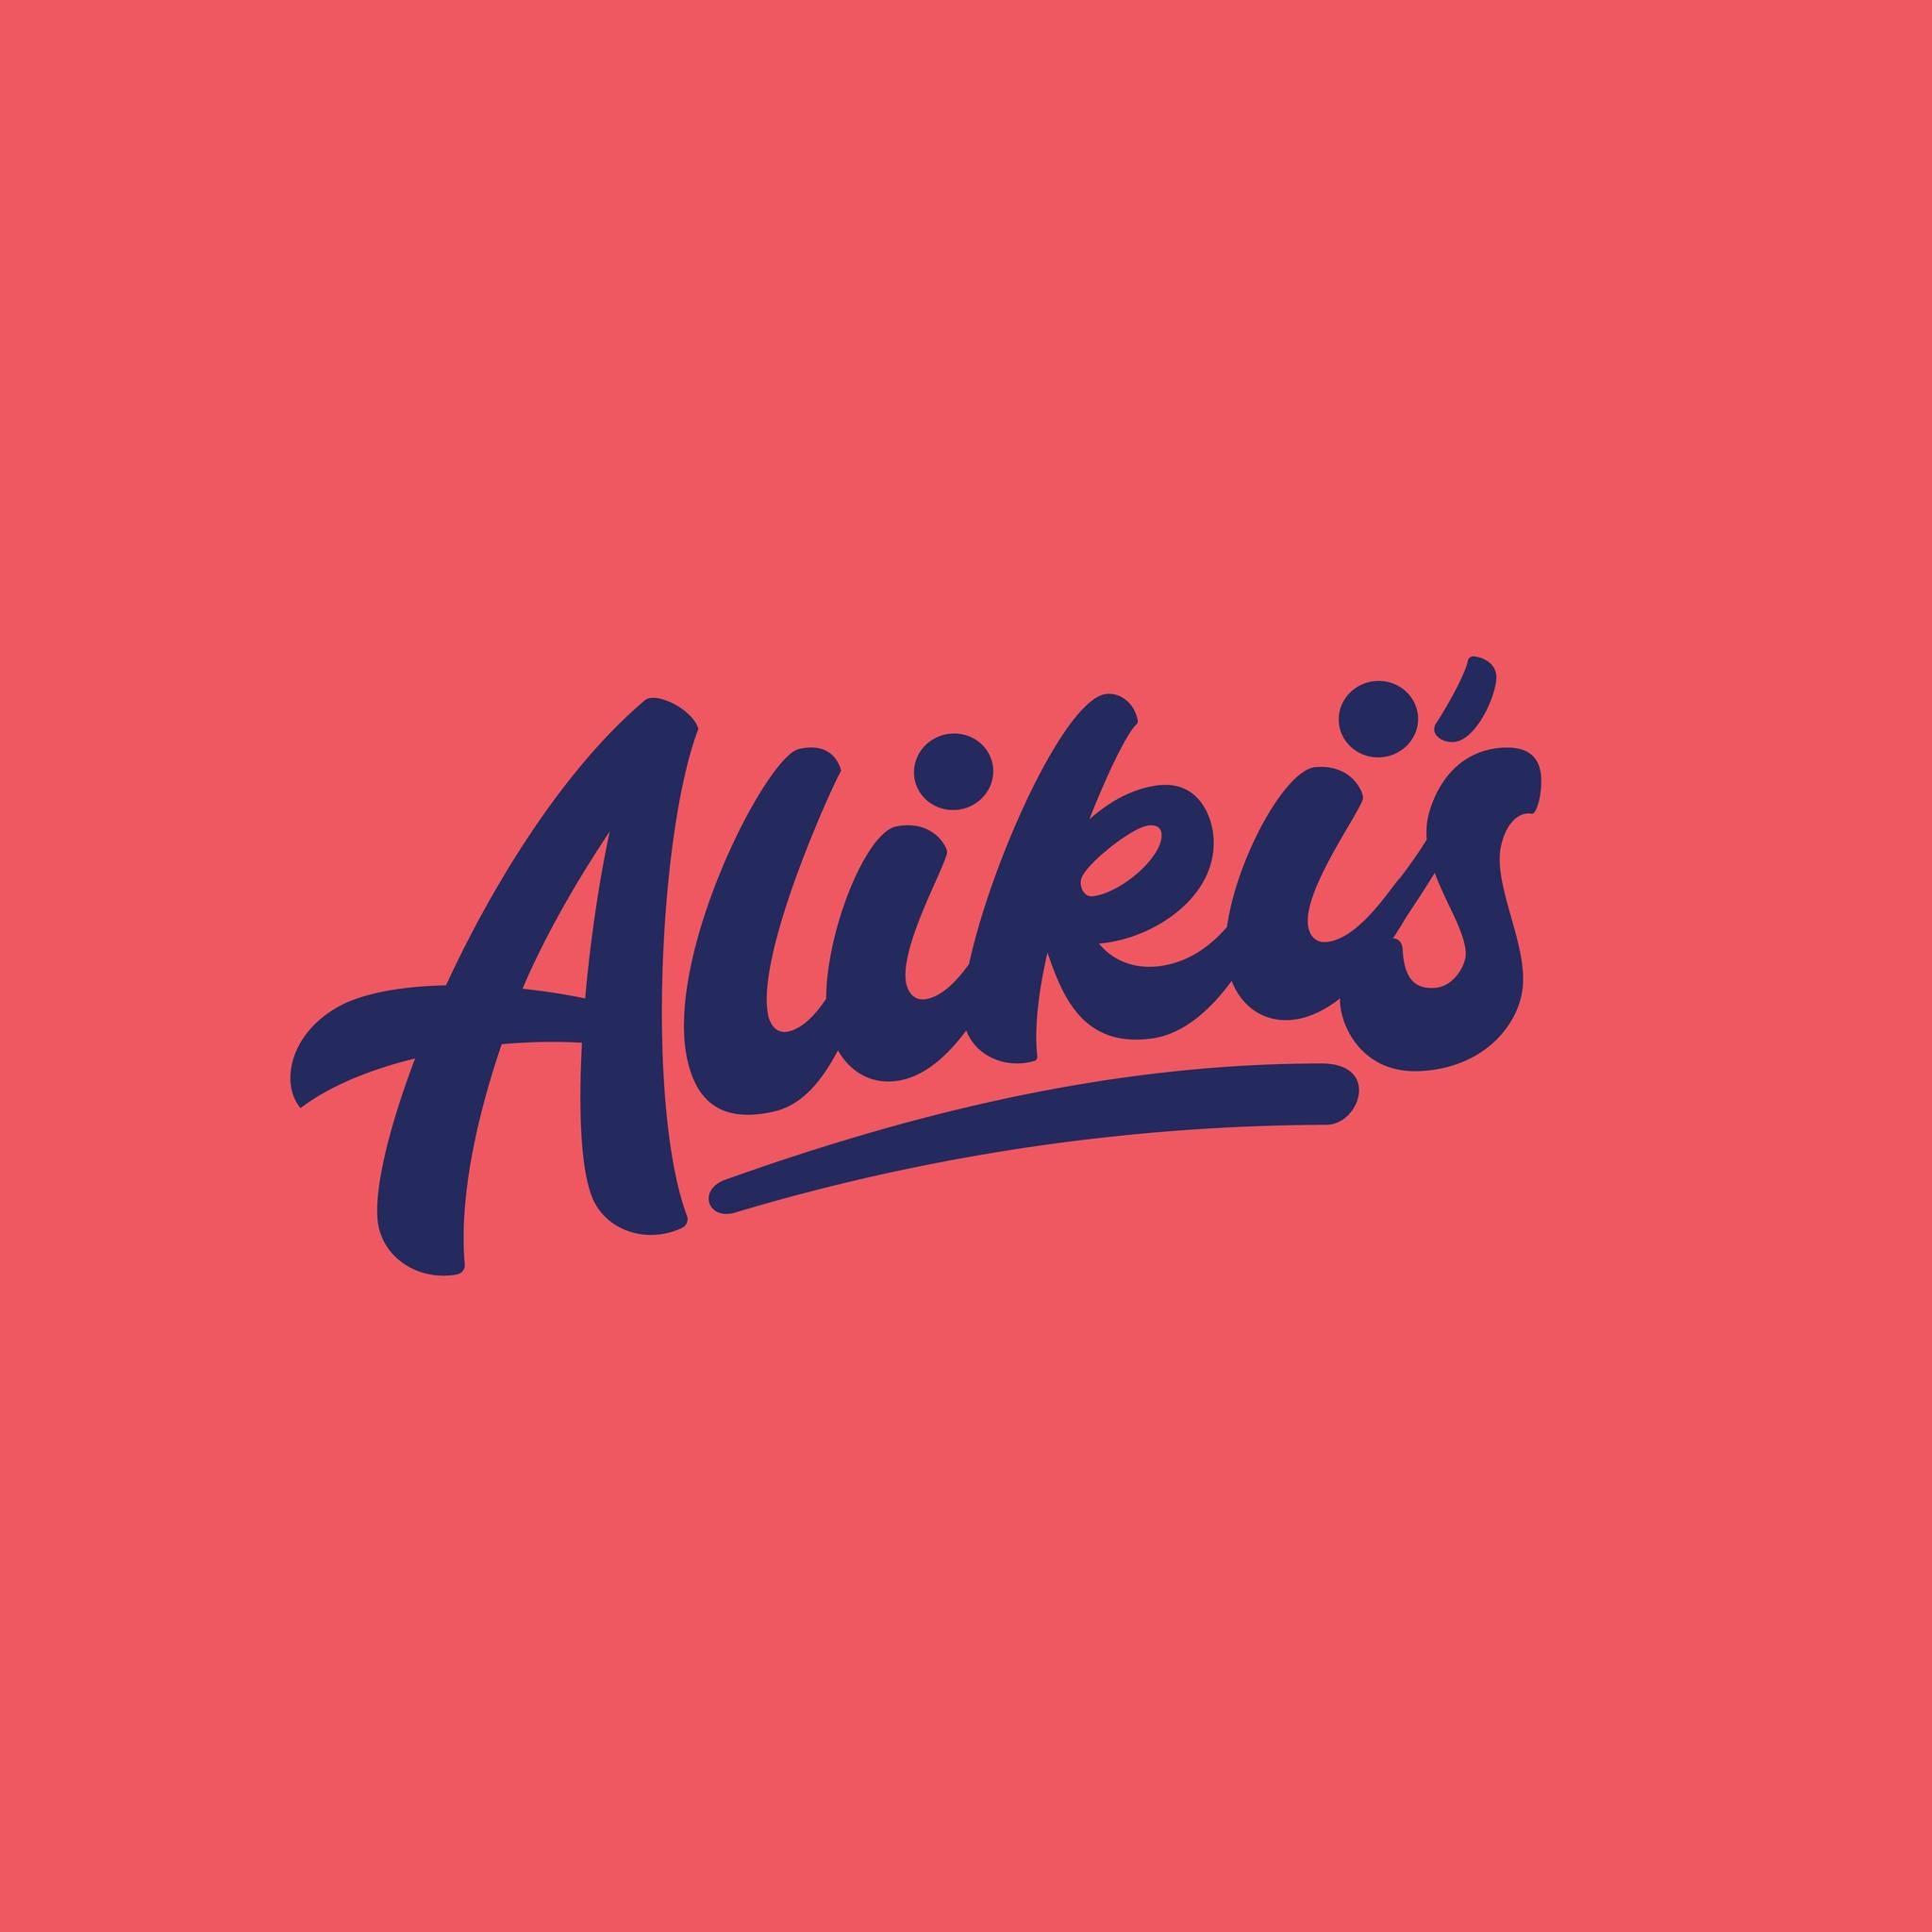 Aliki's Art House Logo